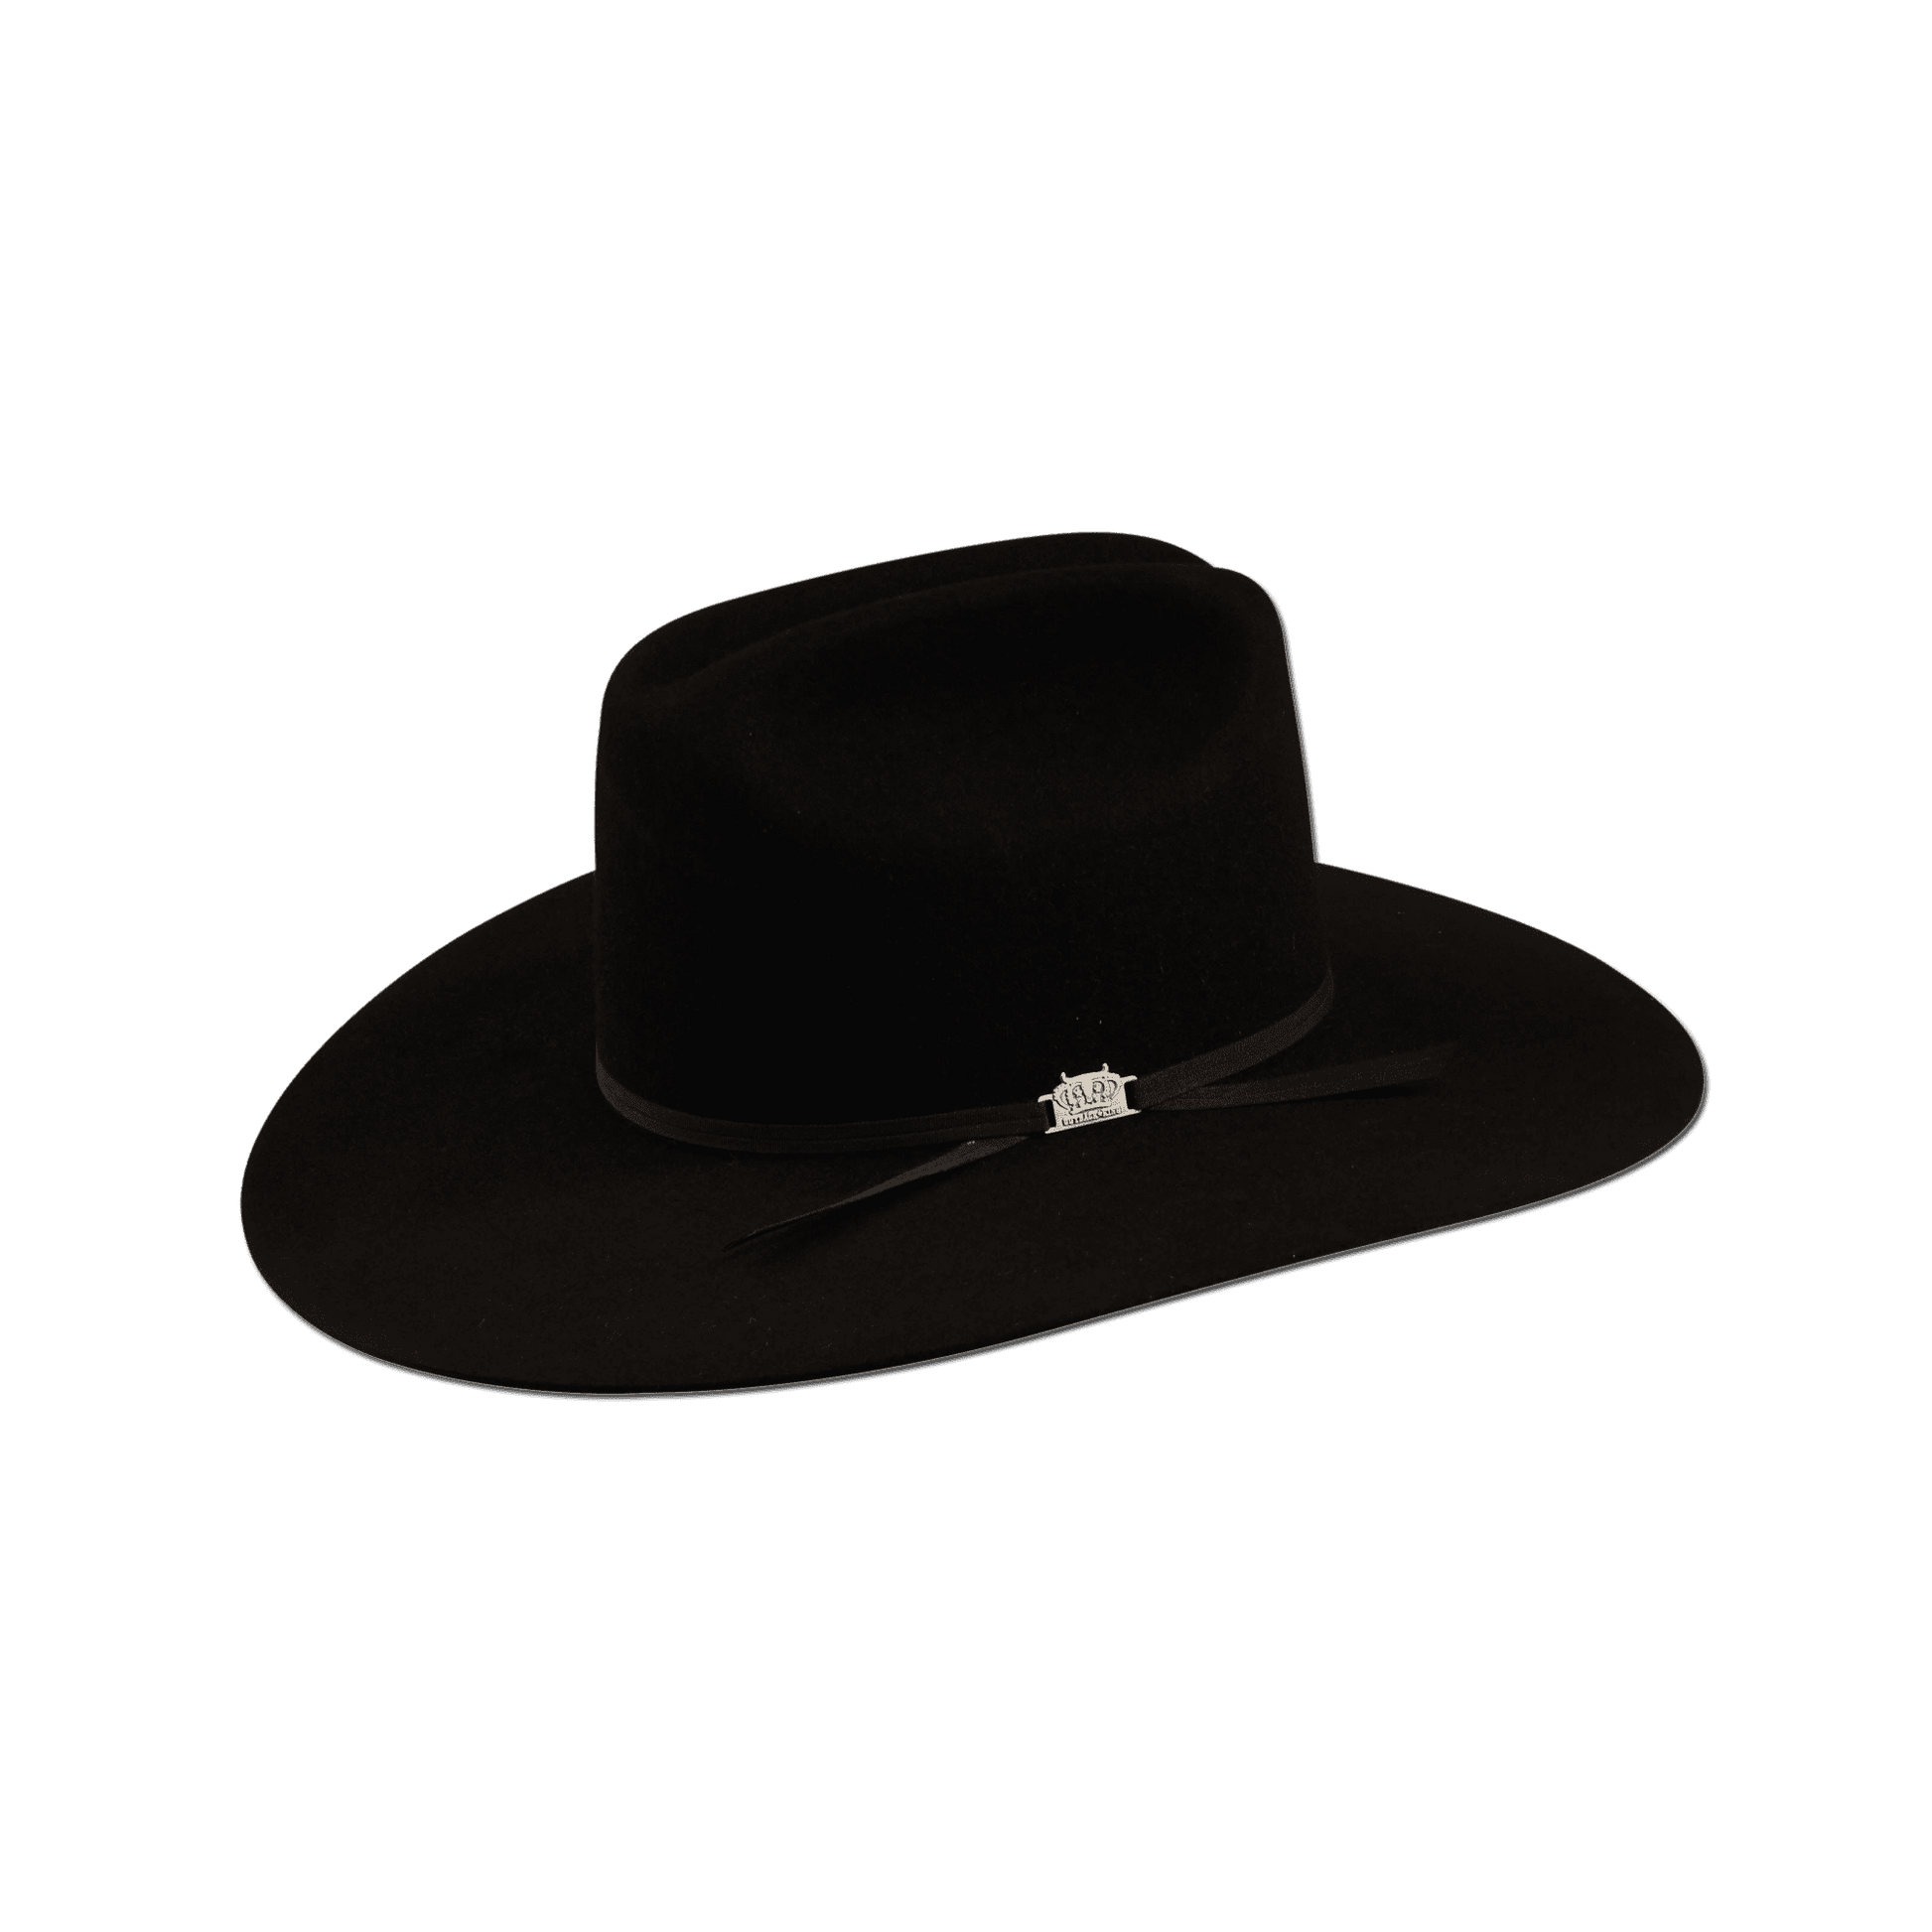 Statesman Hats - Statesman Cowboy Hats Australia